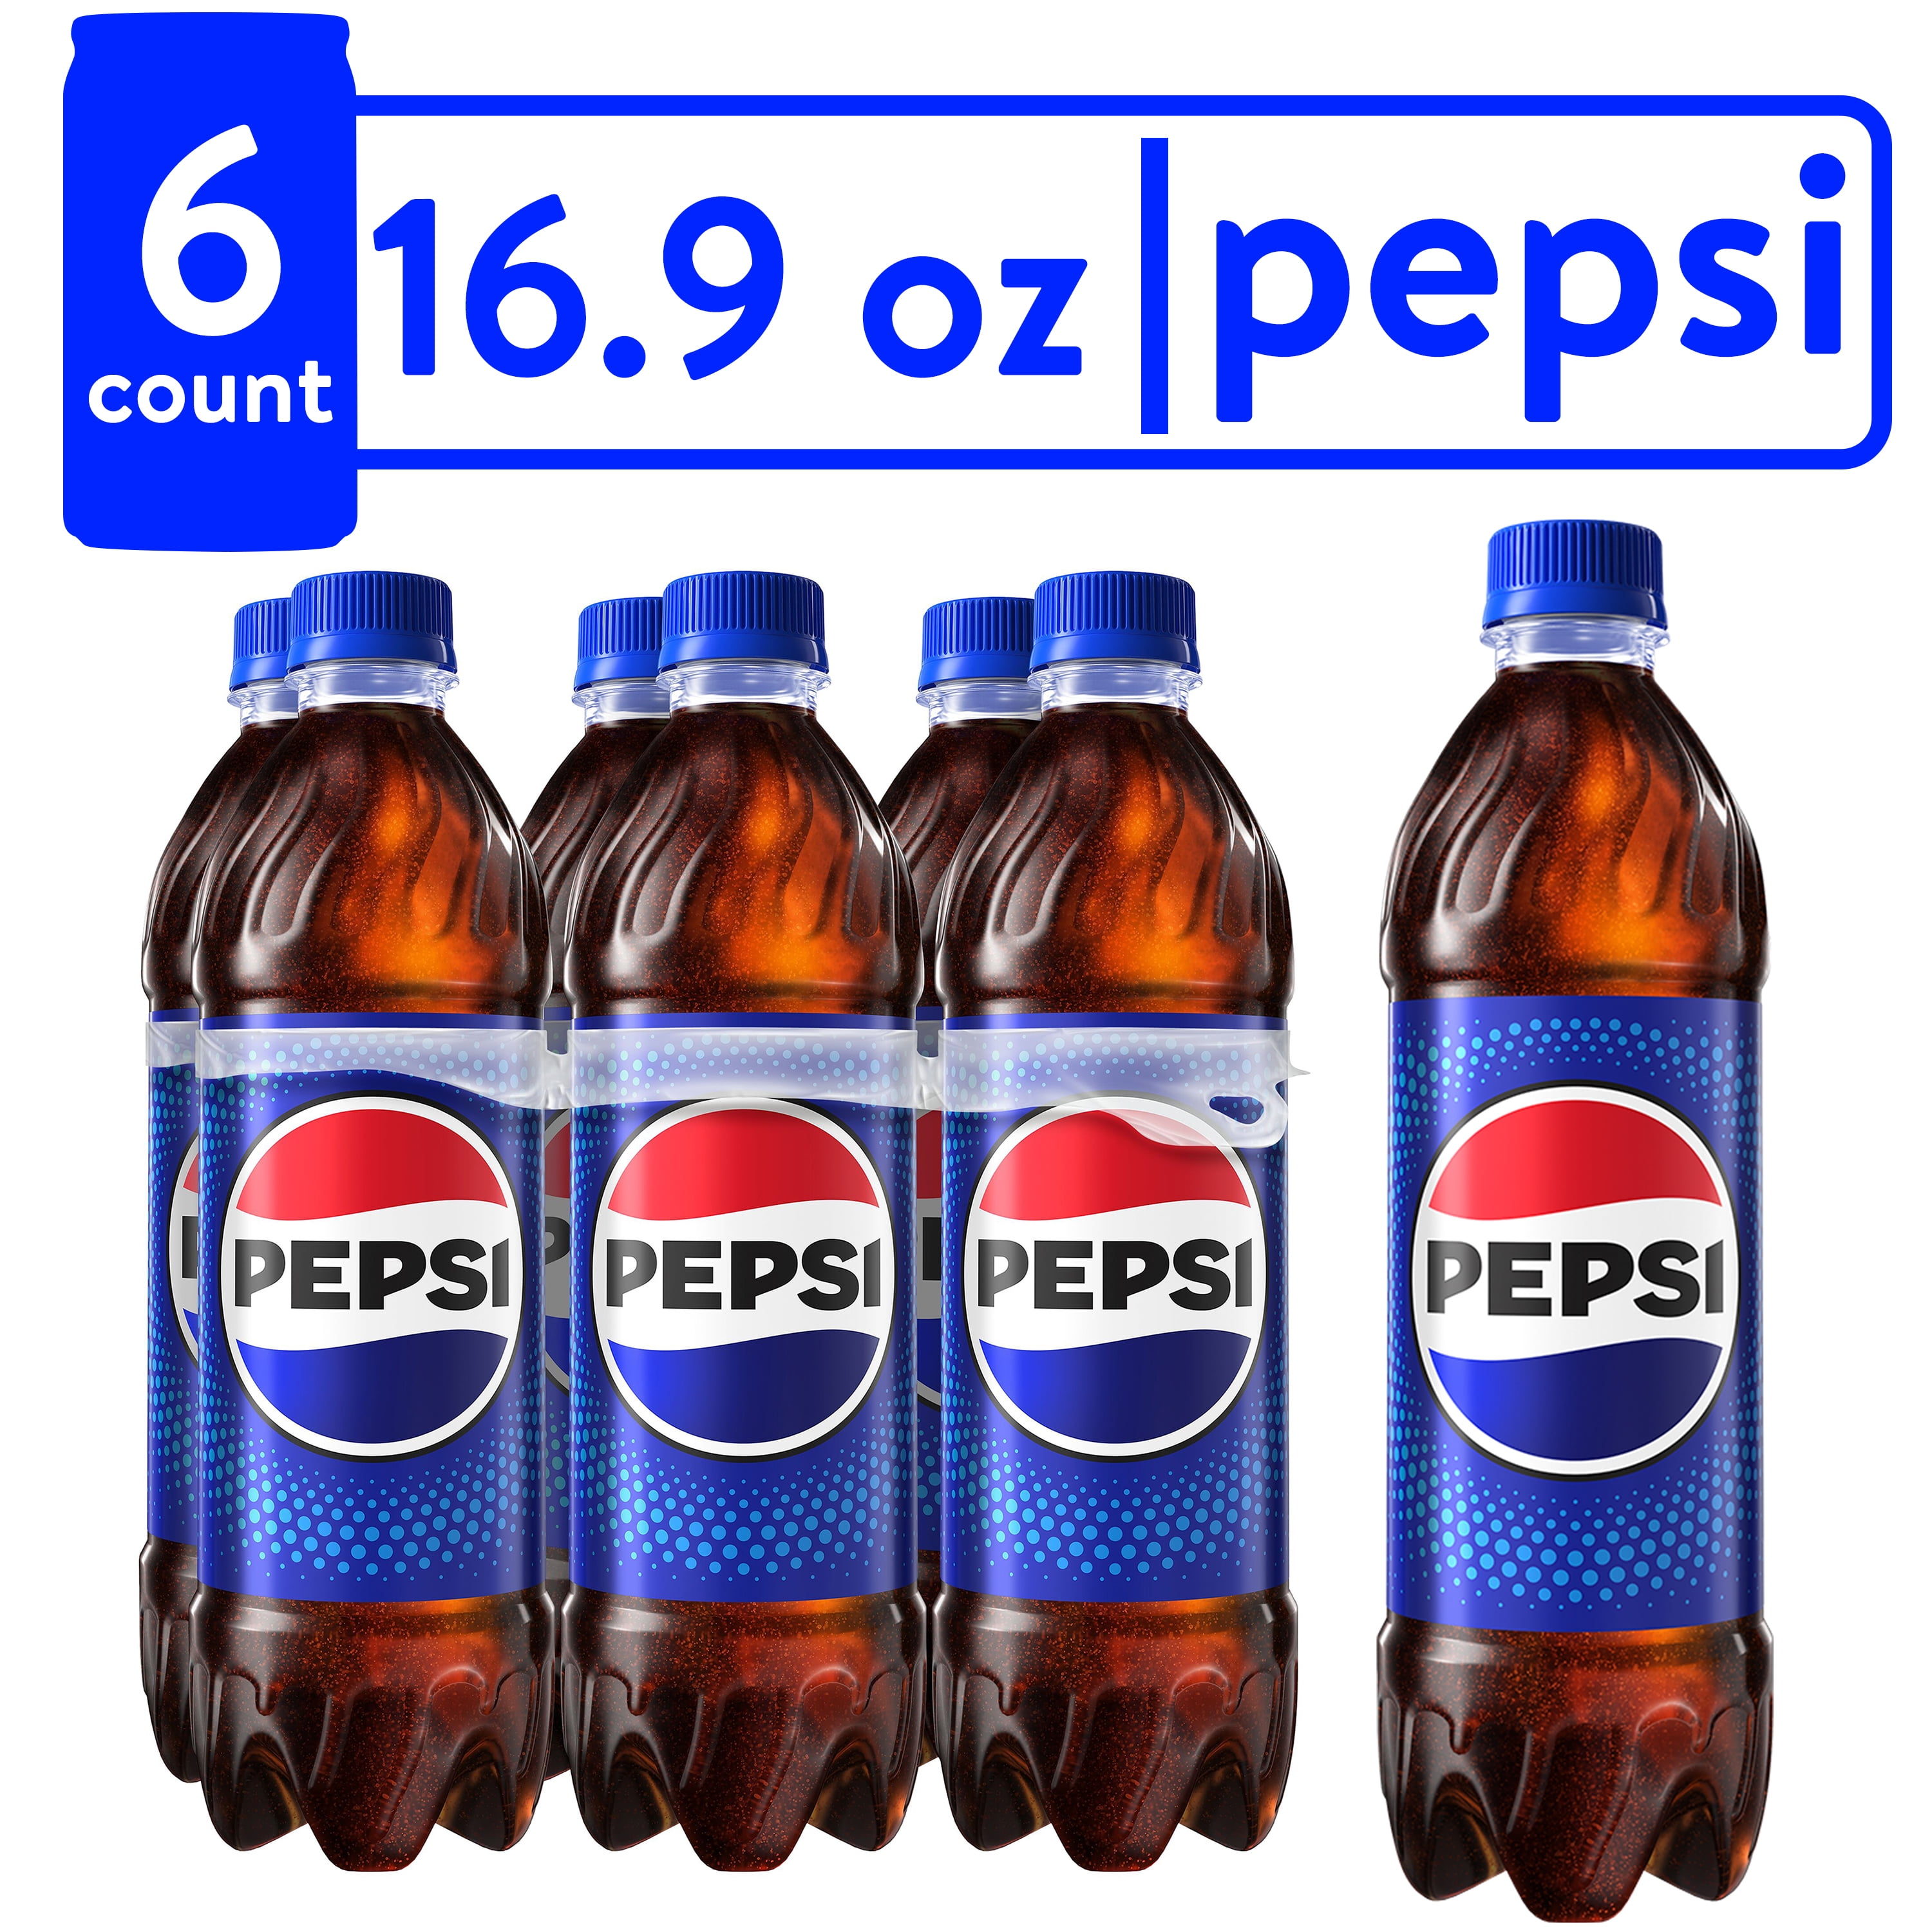 Soda, Pepsi fl Count 6 16.9 oz,